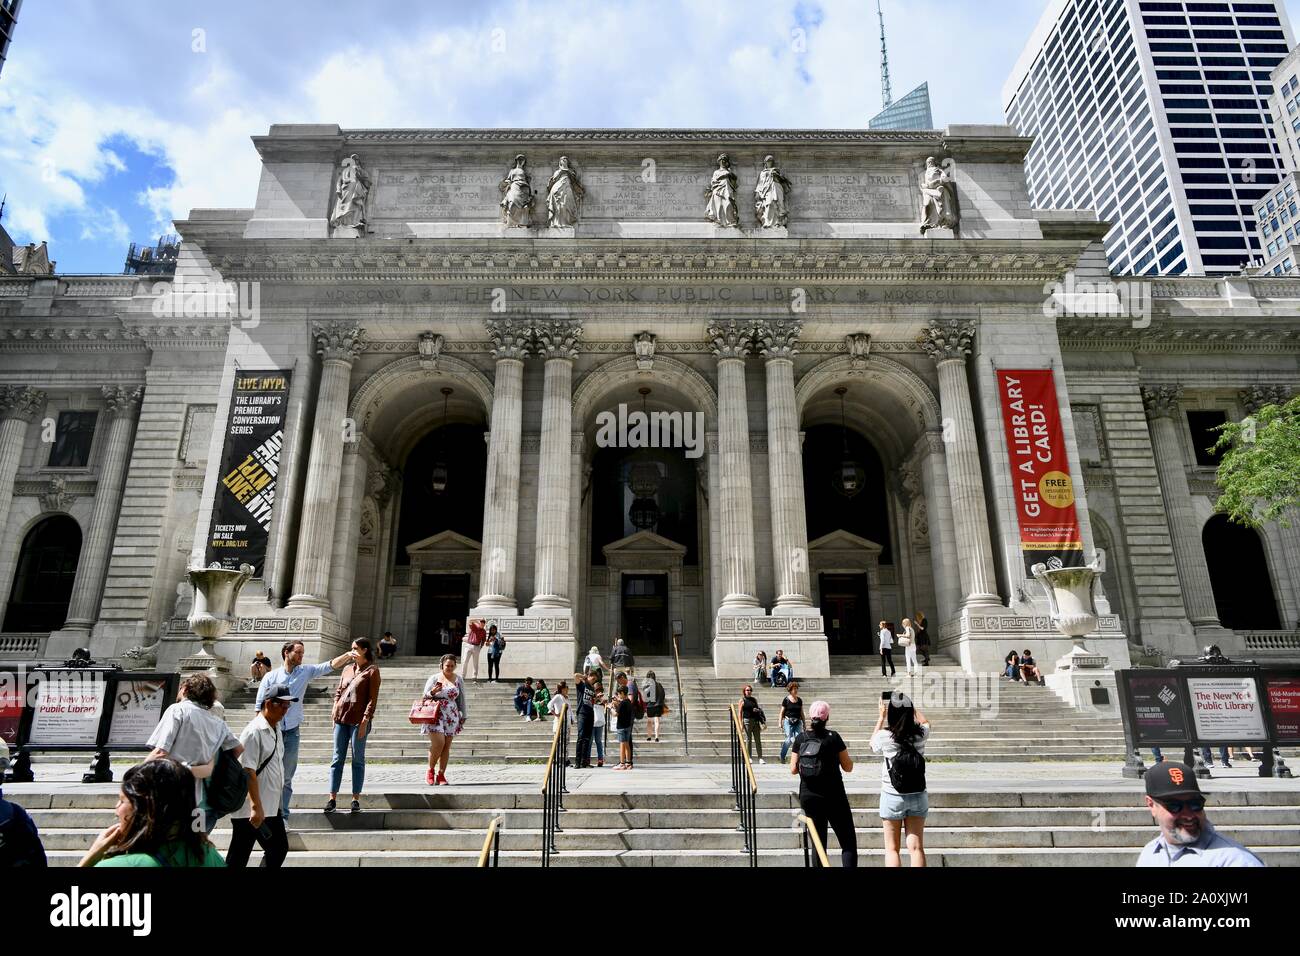 New York Public Library - Stephen A. Schwarzman Building, NYC, USA Stock Photo